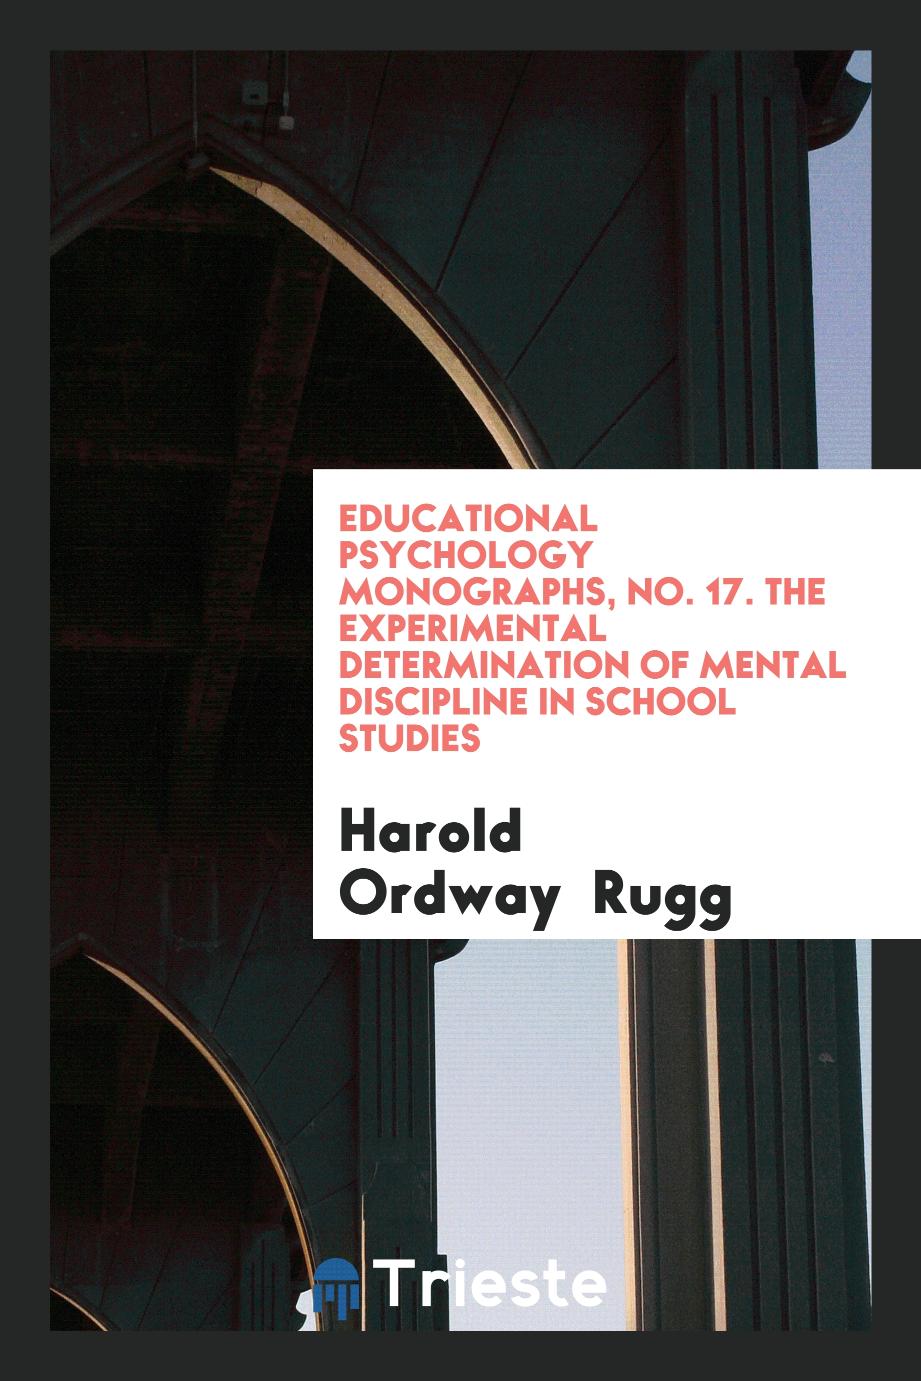 Educational Psychology Monographs, No. 17. The Experimental Determination of Mental Discipline in School Studies